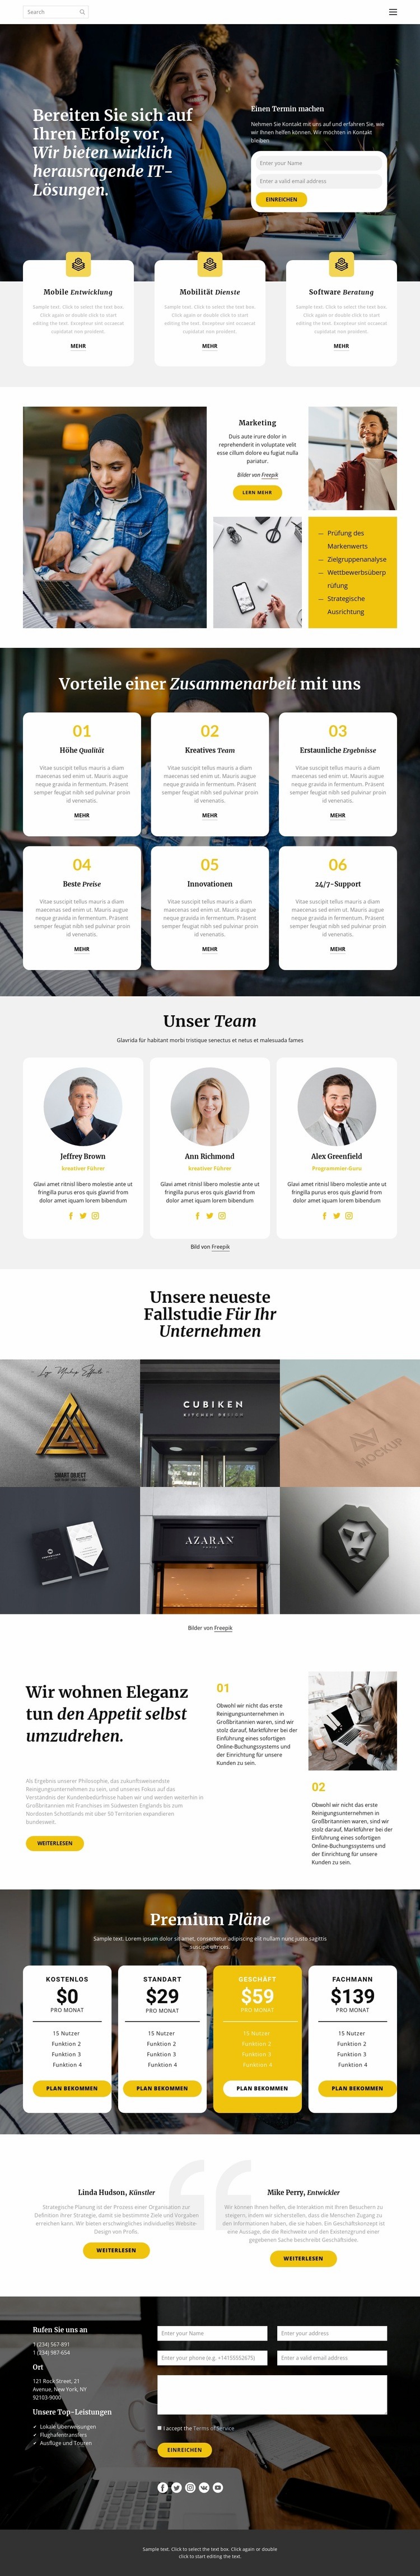 Aktiengesellschaft Website design